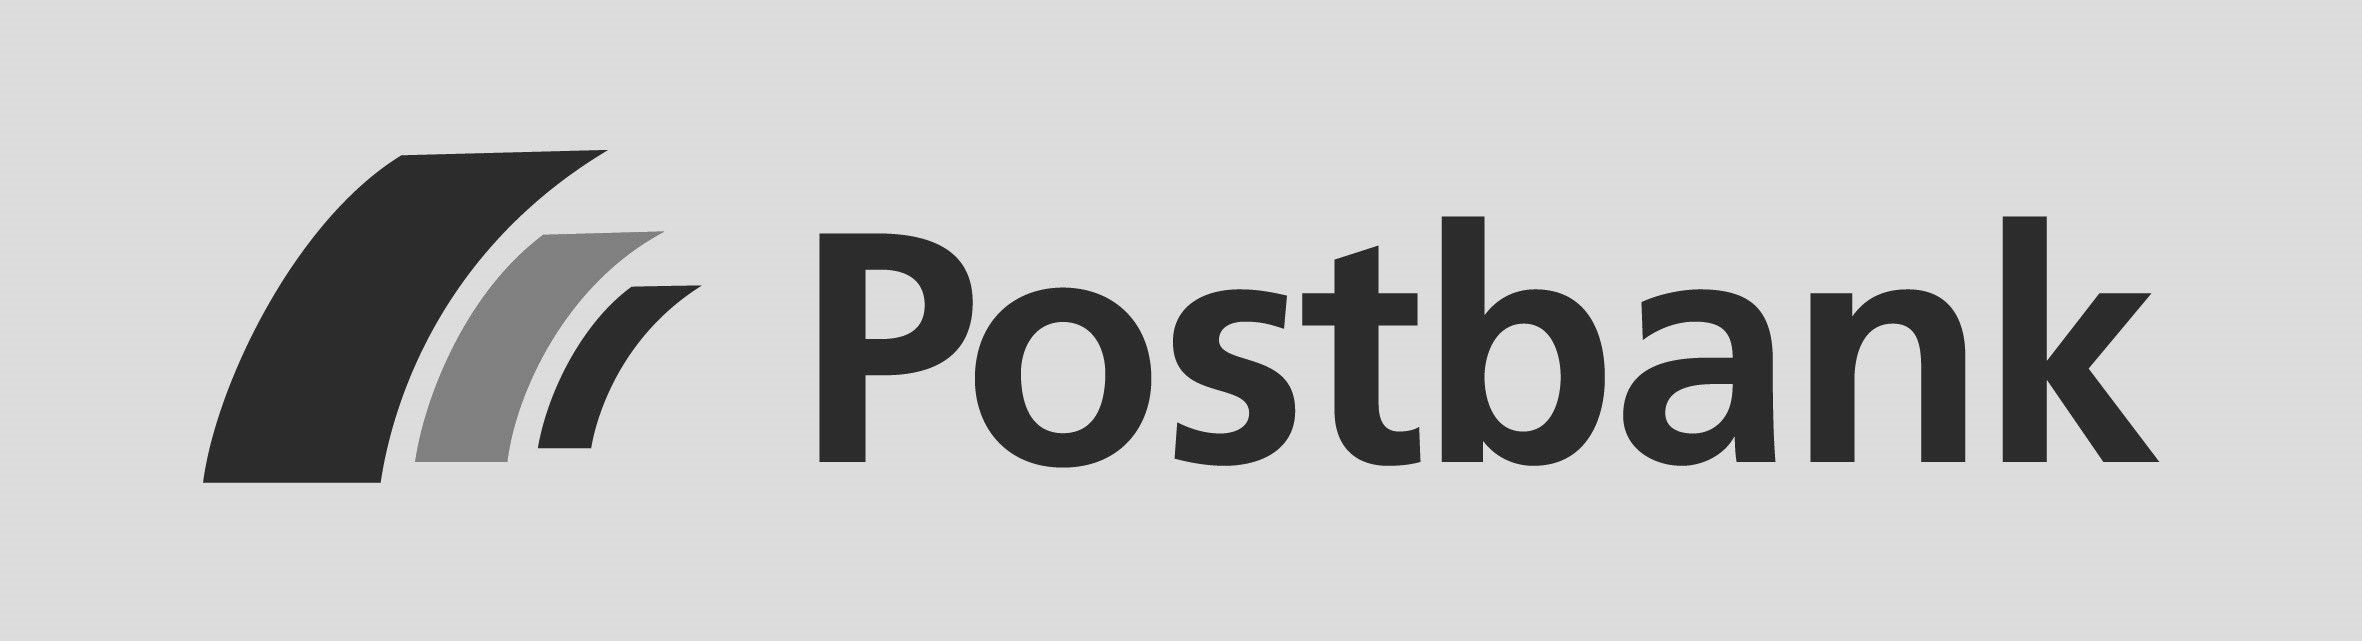 Postbank Logo.